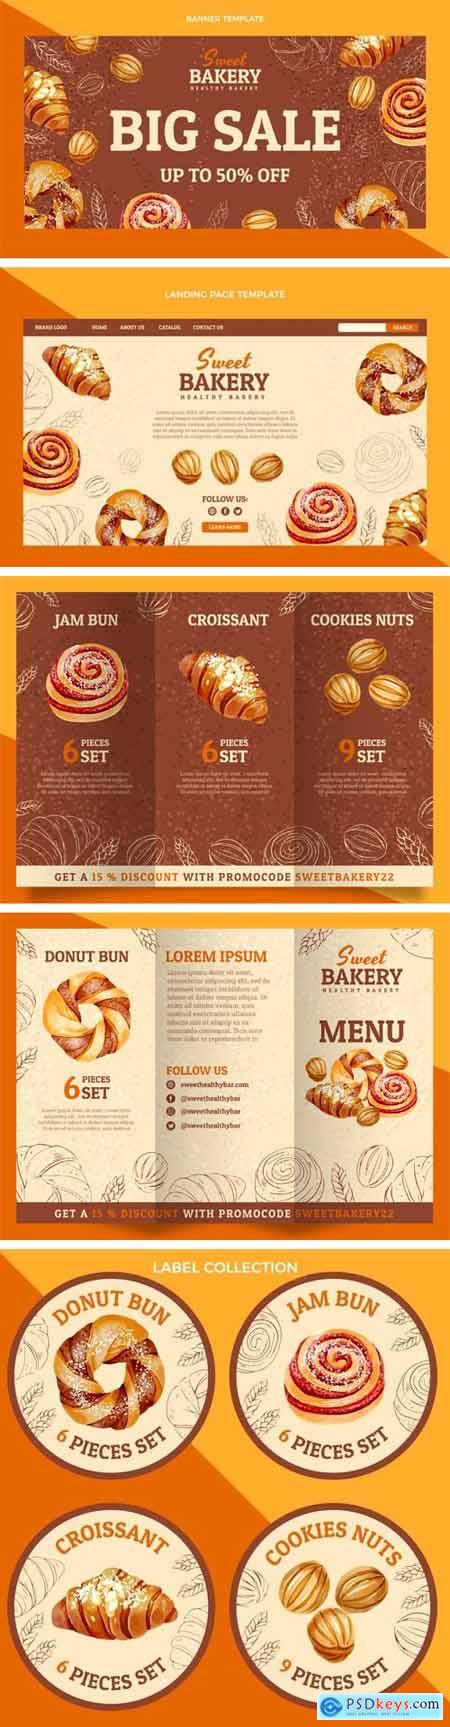 Bakery Sales Vector Design Templates Collection